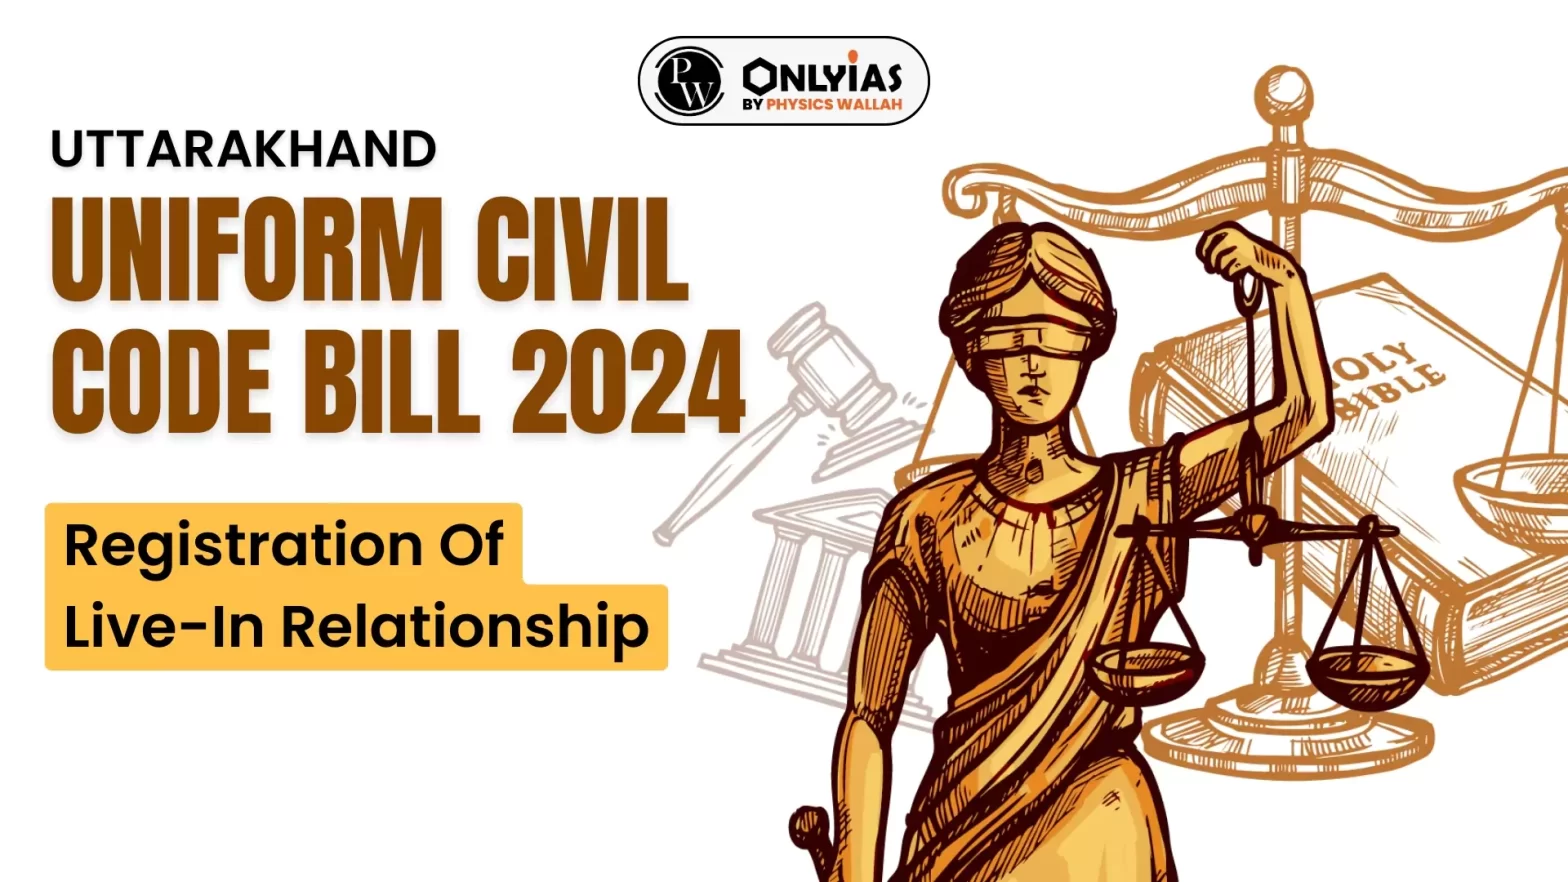 Uttarakhand Uniform Civil Code Bill 2024: Registration Of Live-In Relationship